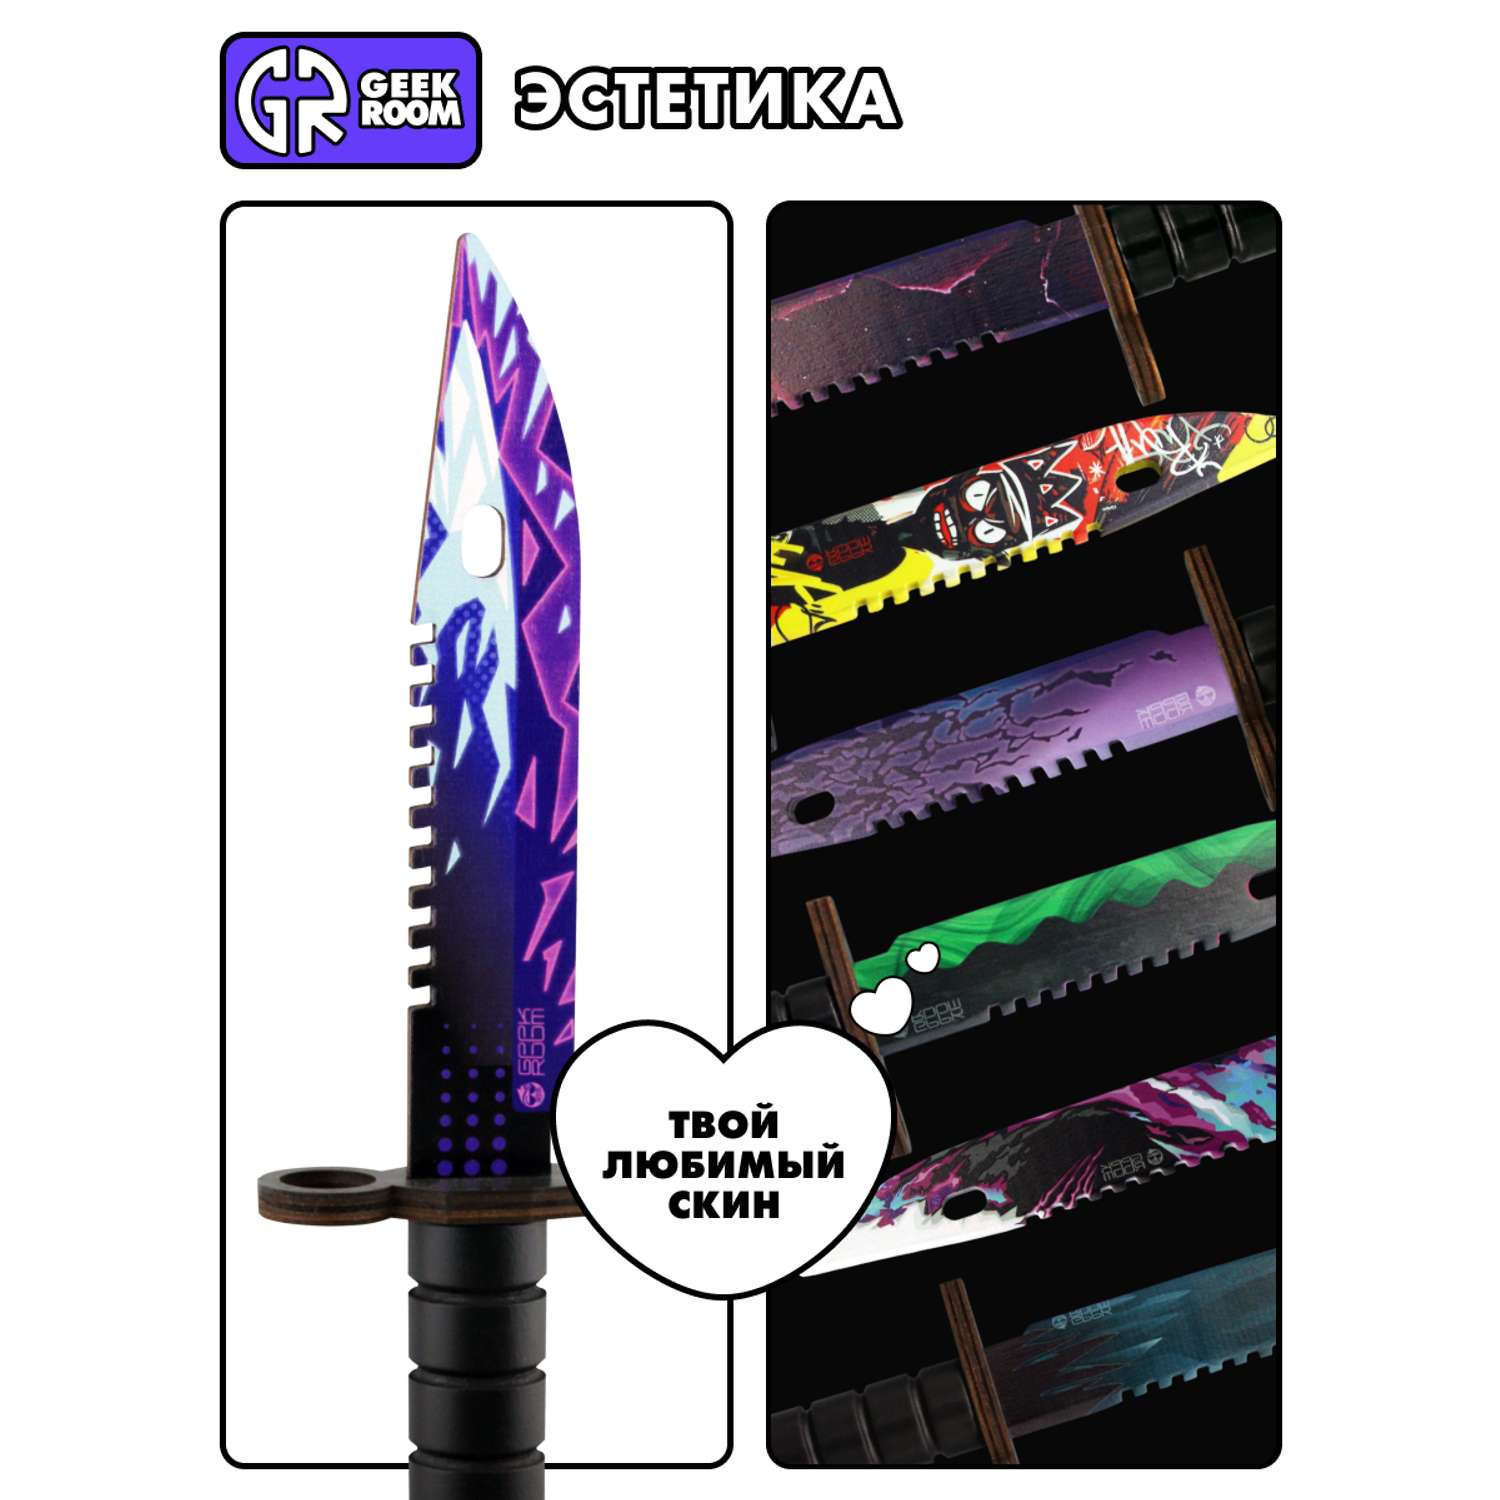 Набор деревянного оружия GEEKROOM нож бабочка Dragon glass керамбит Scratch штык М9 байонет Digital burst. - фото 9